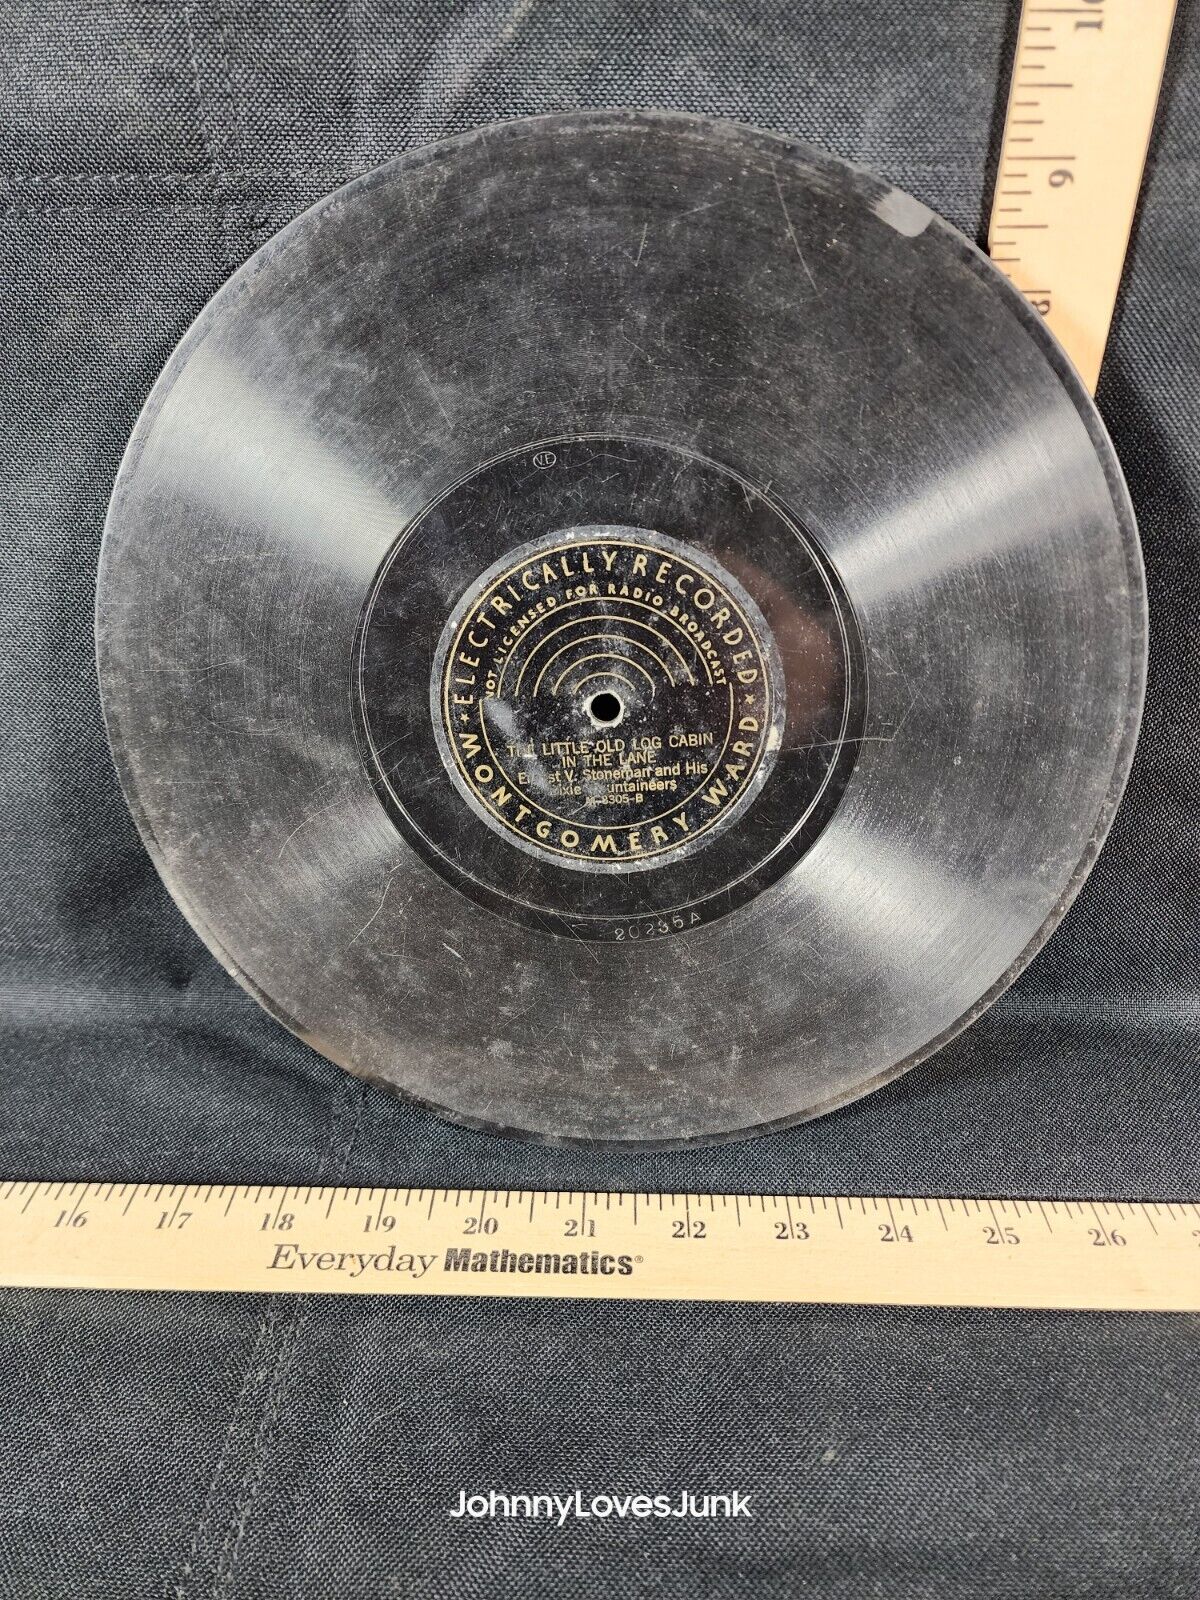 Vintage Montgomery Ward Records 10in 78 Record Billings/Robinson/ Stonemar Mix 